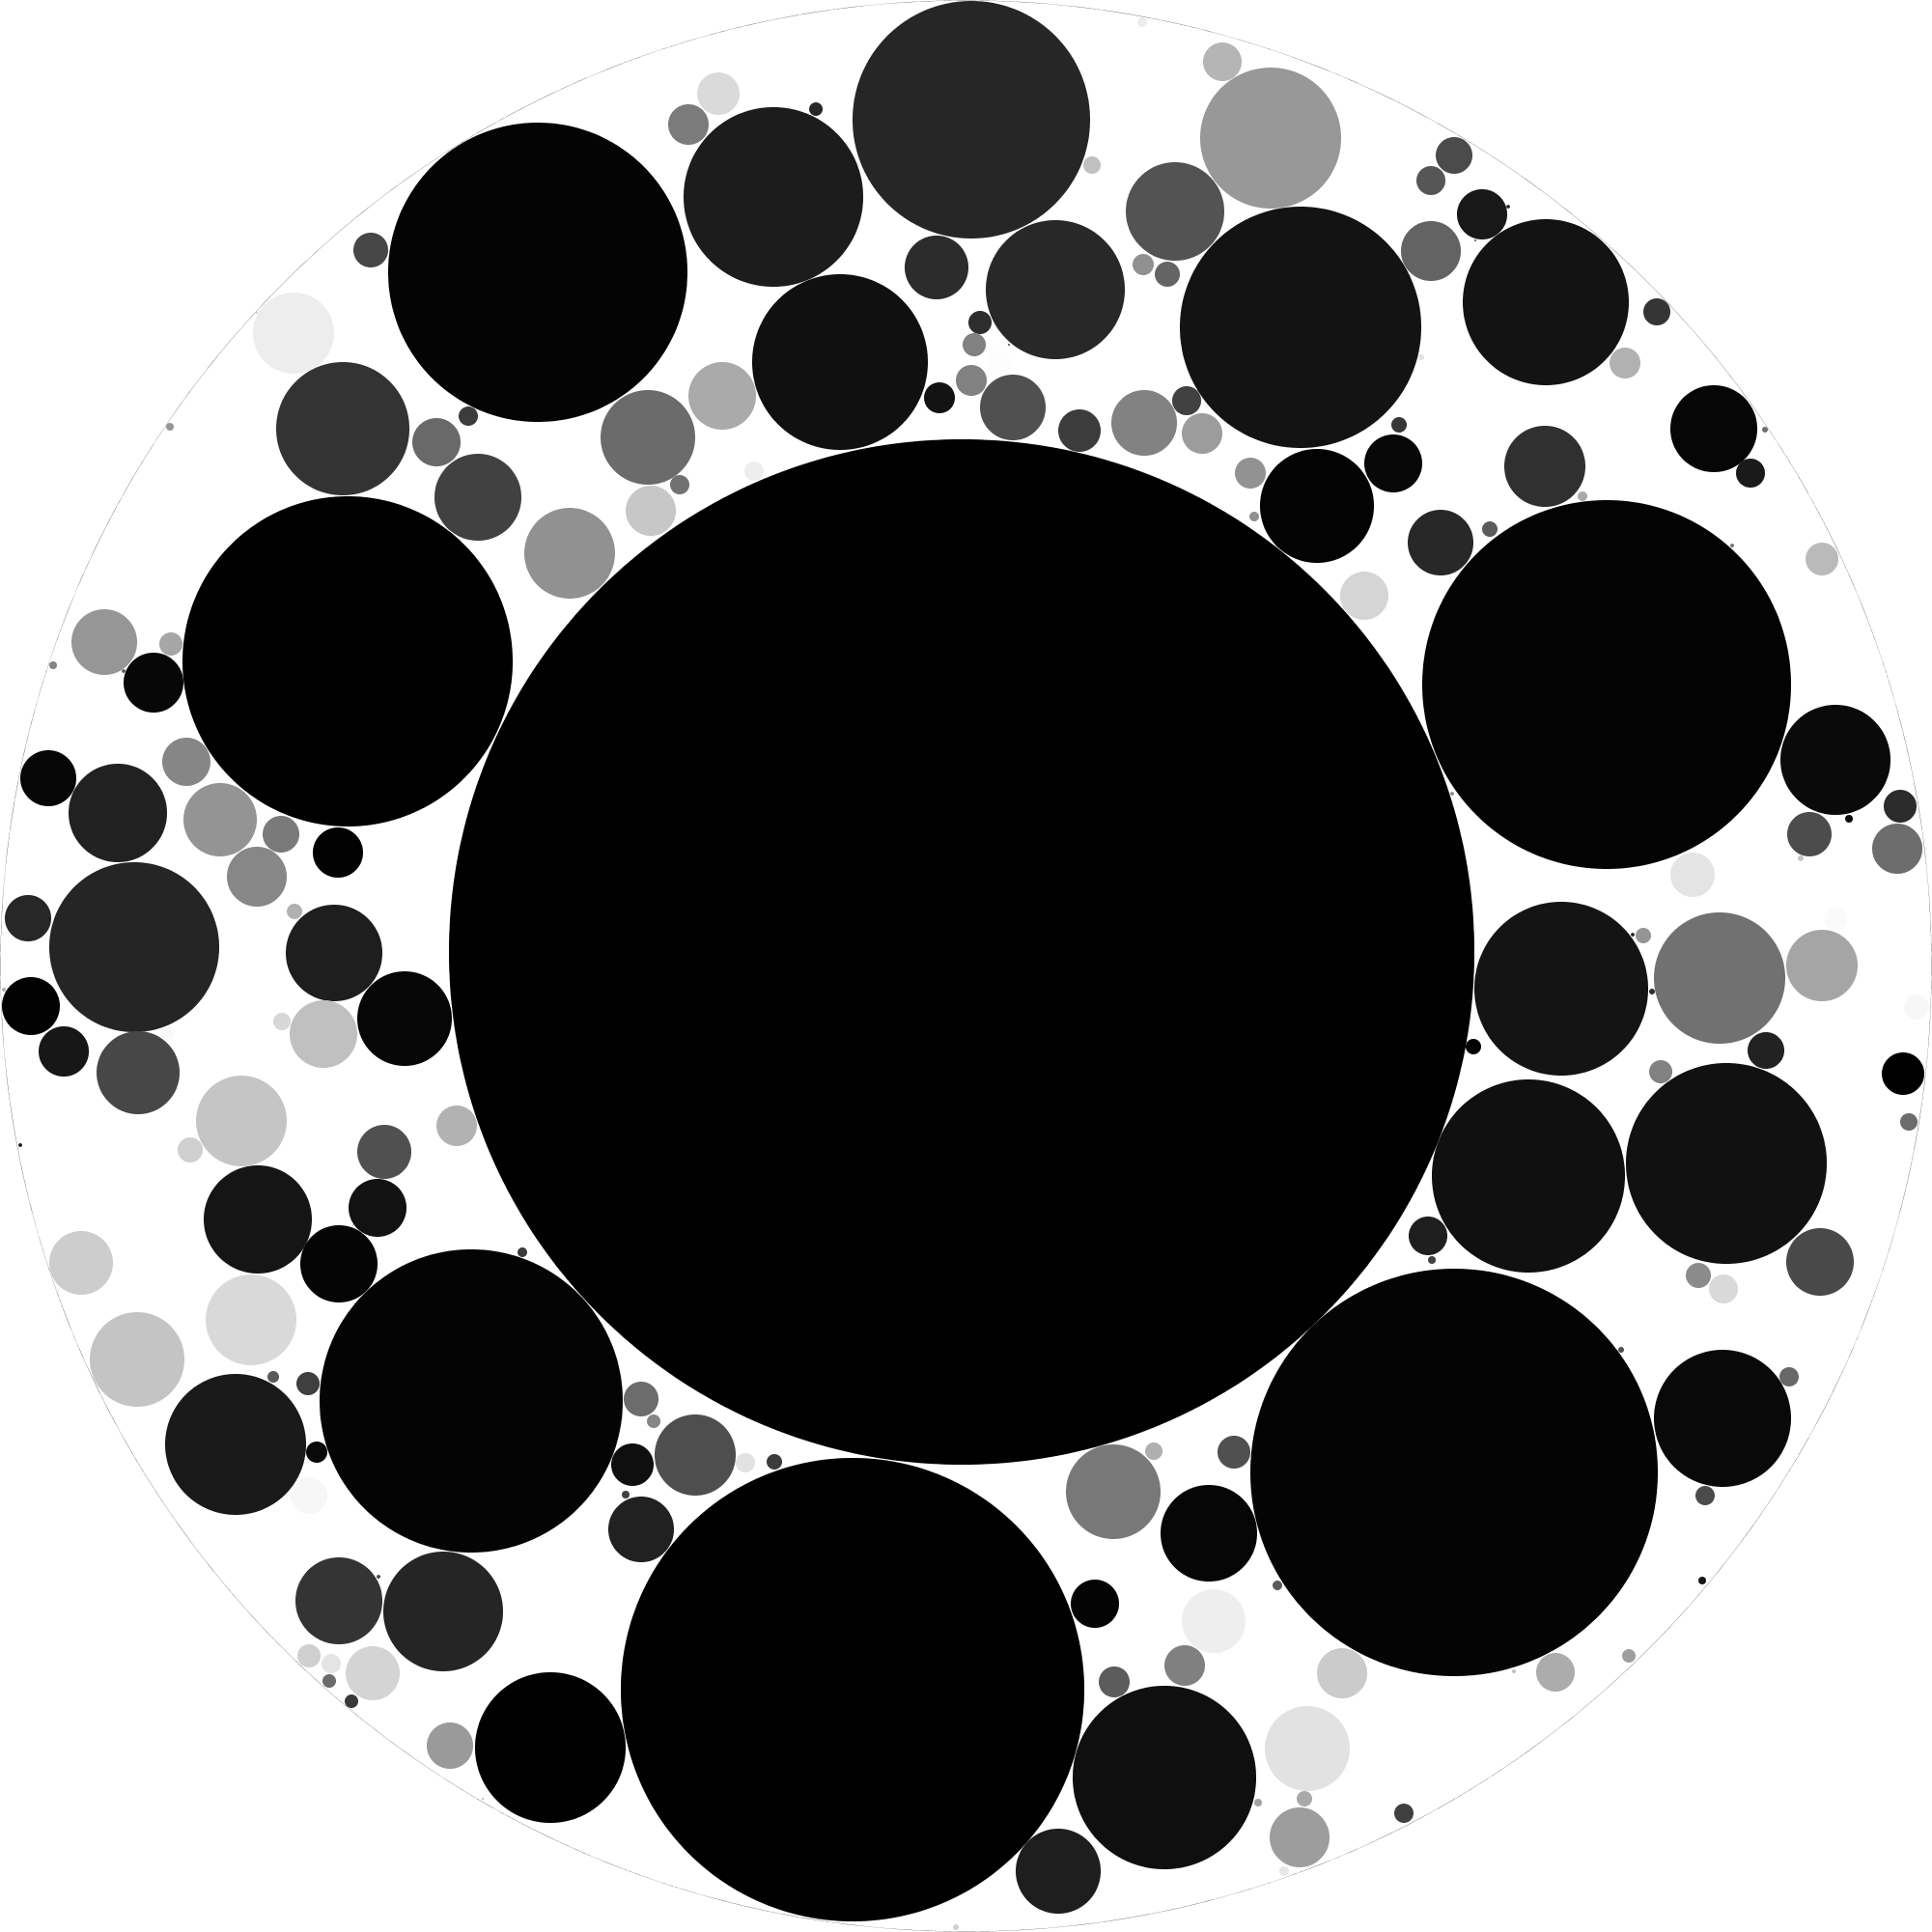 A collection of colliding circles.